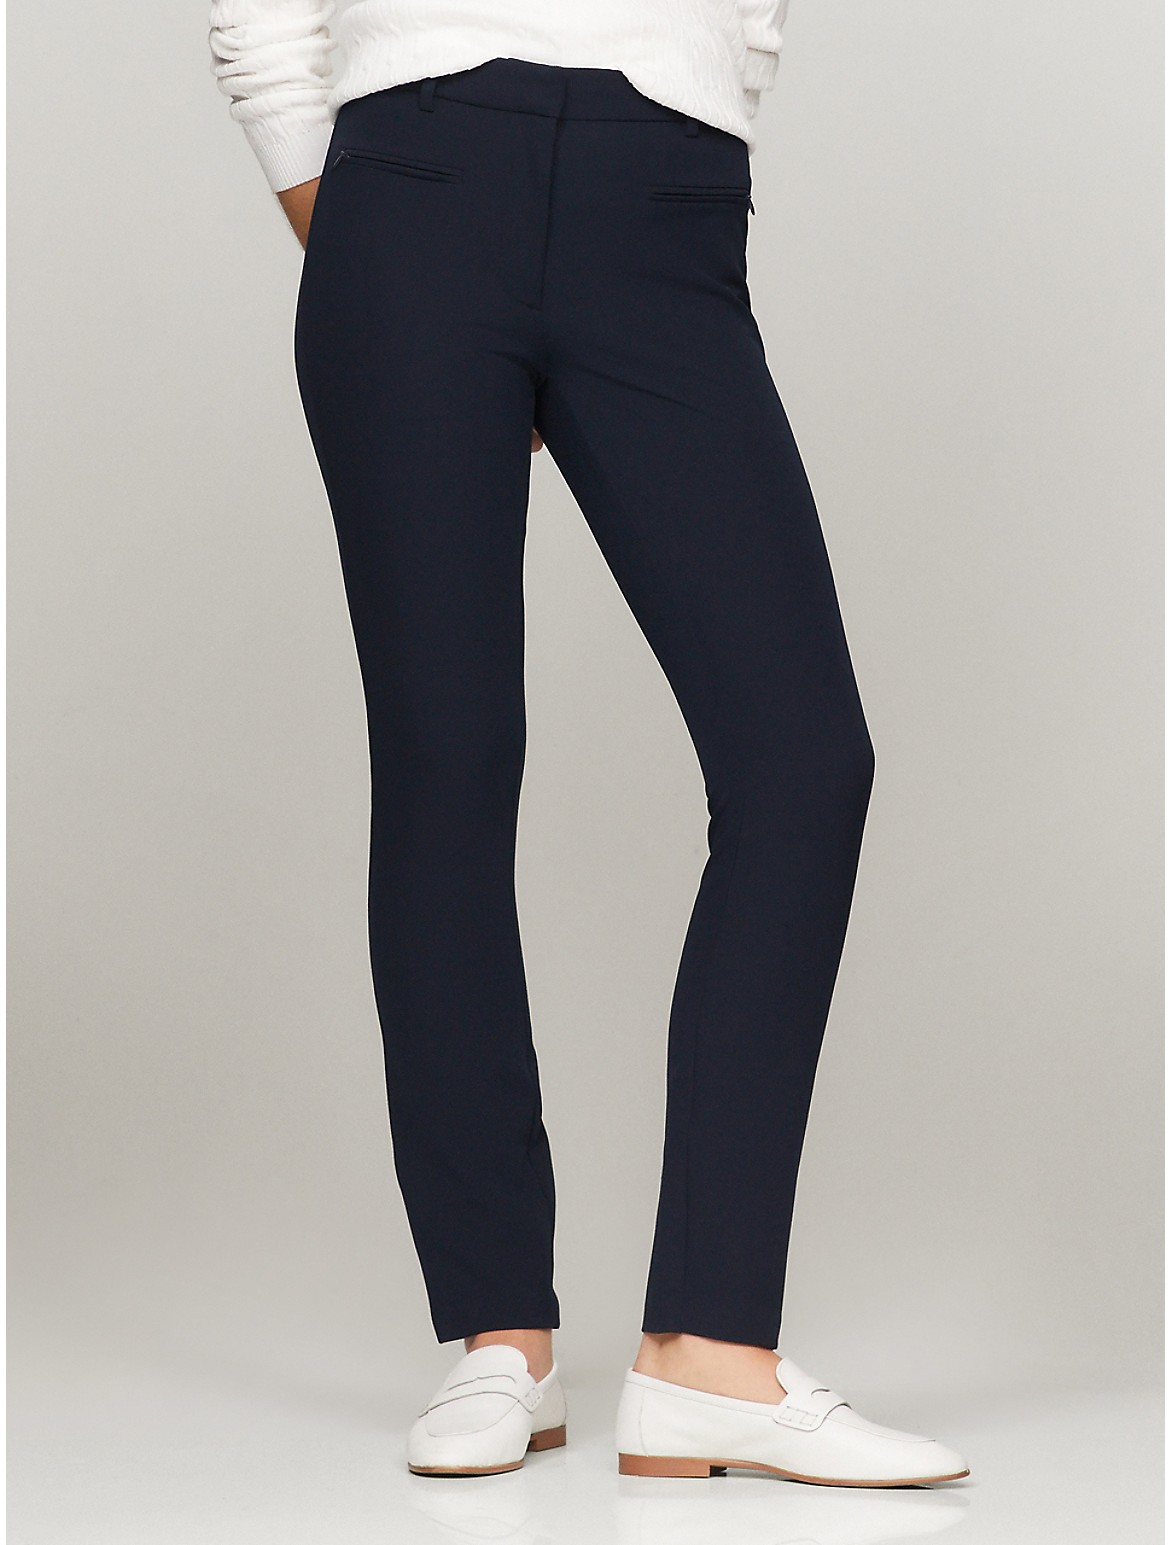 Tommy Hilfiger Women's Slim Fit Solid Pant